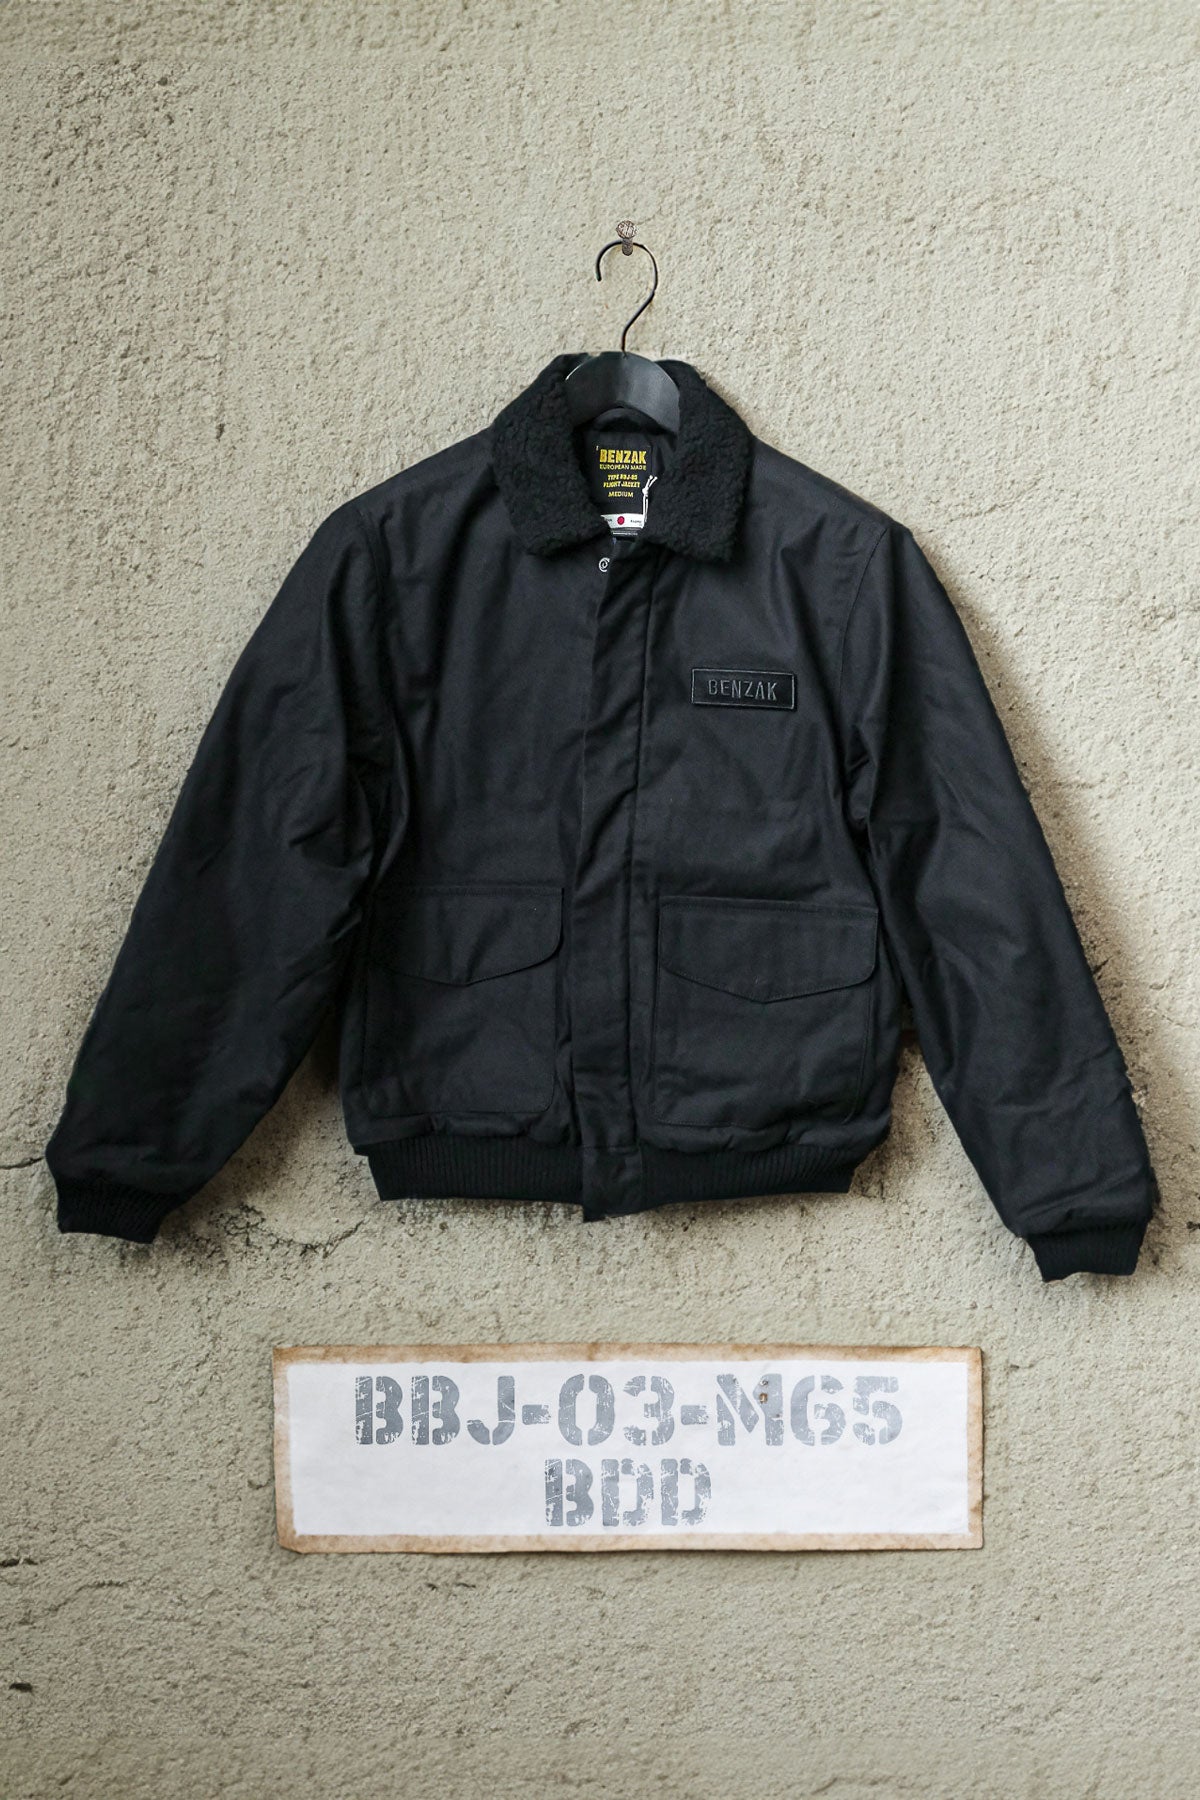 Benzak - BBJ-03 Flight Jacket  M-65 Reverse Sateen Twill in Black